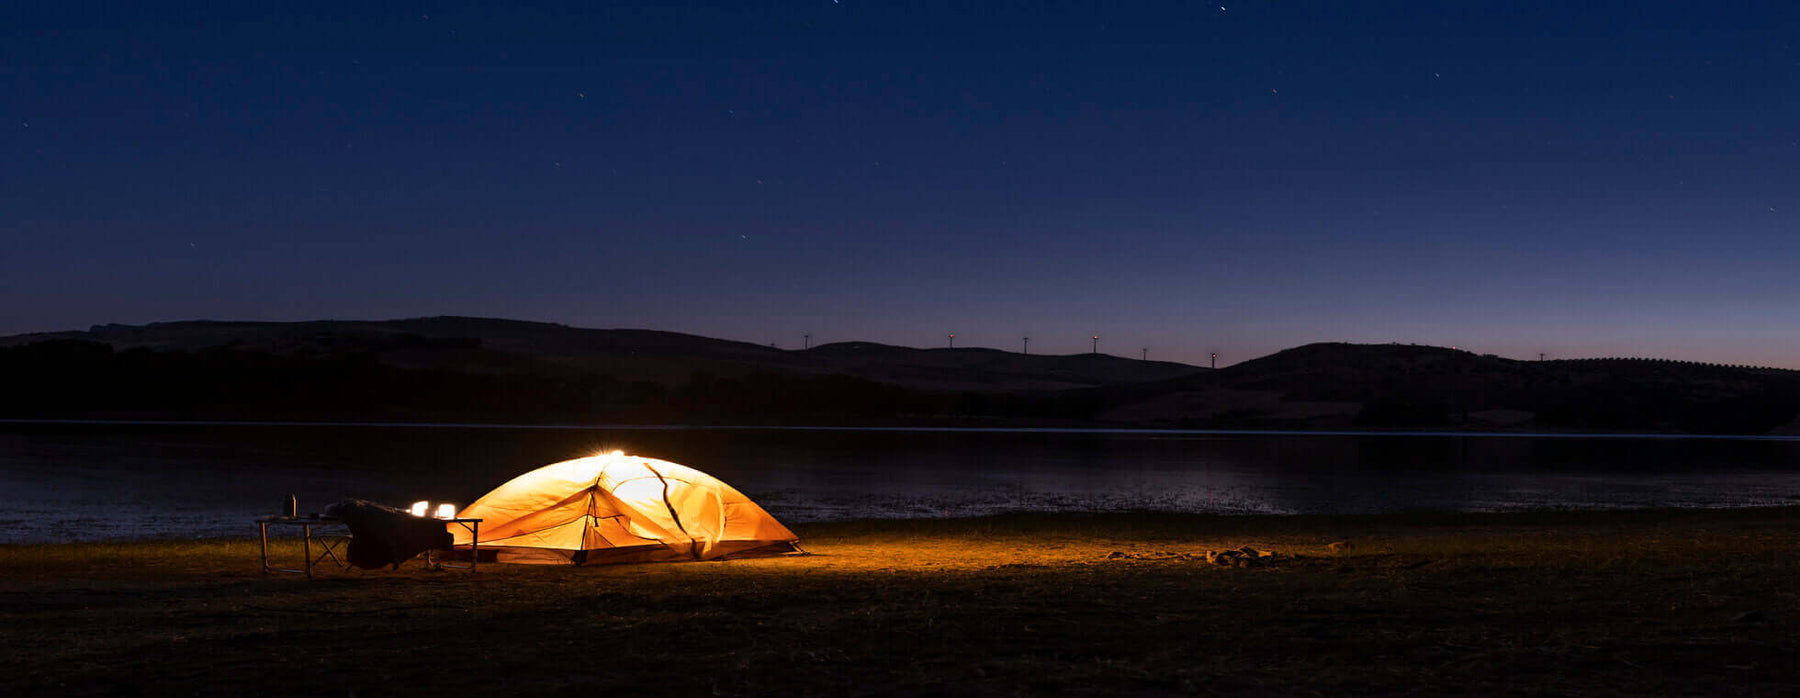 Night time camping